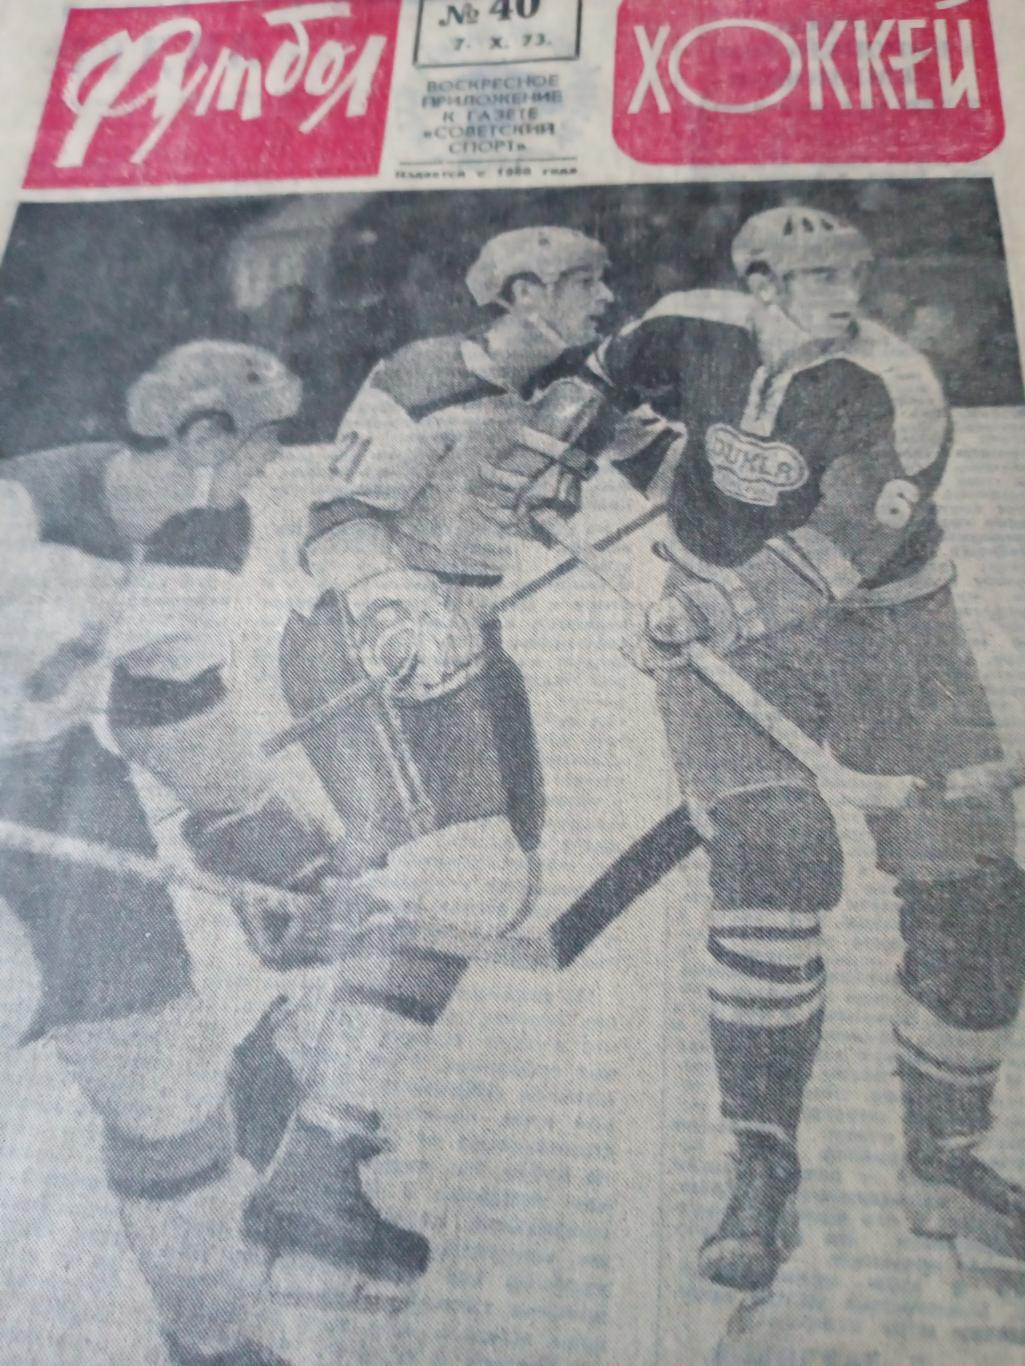 Футбол - Хоккей. 1973 год, № 40